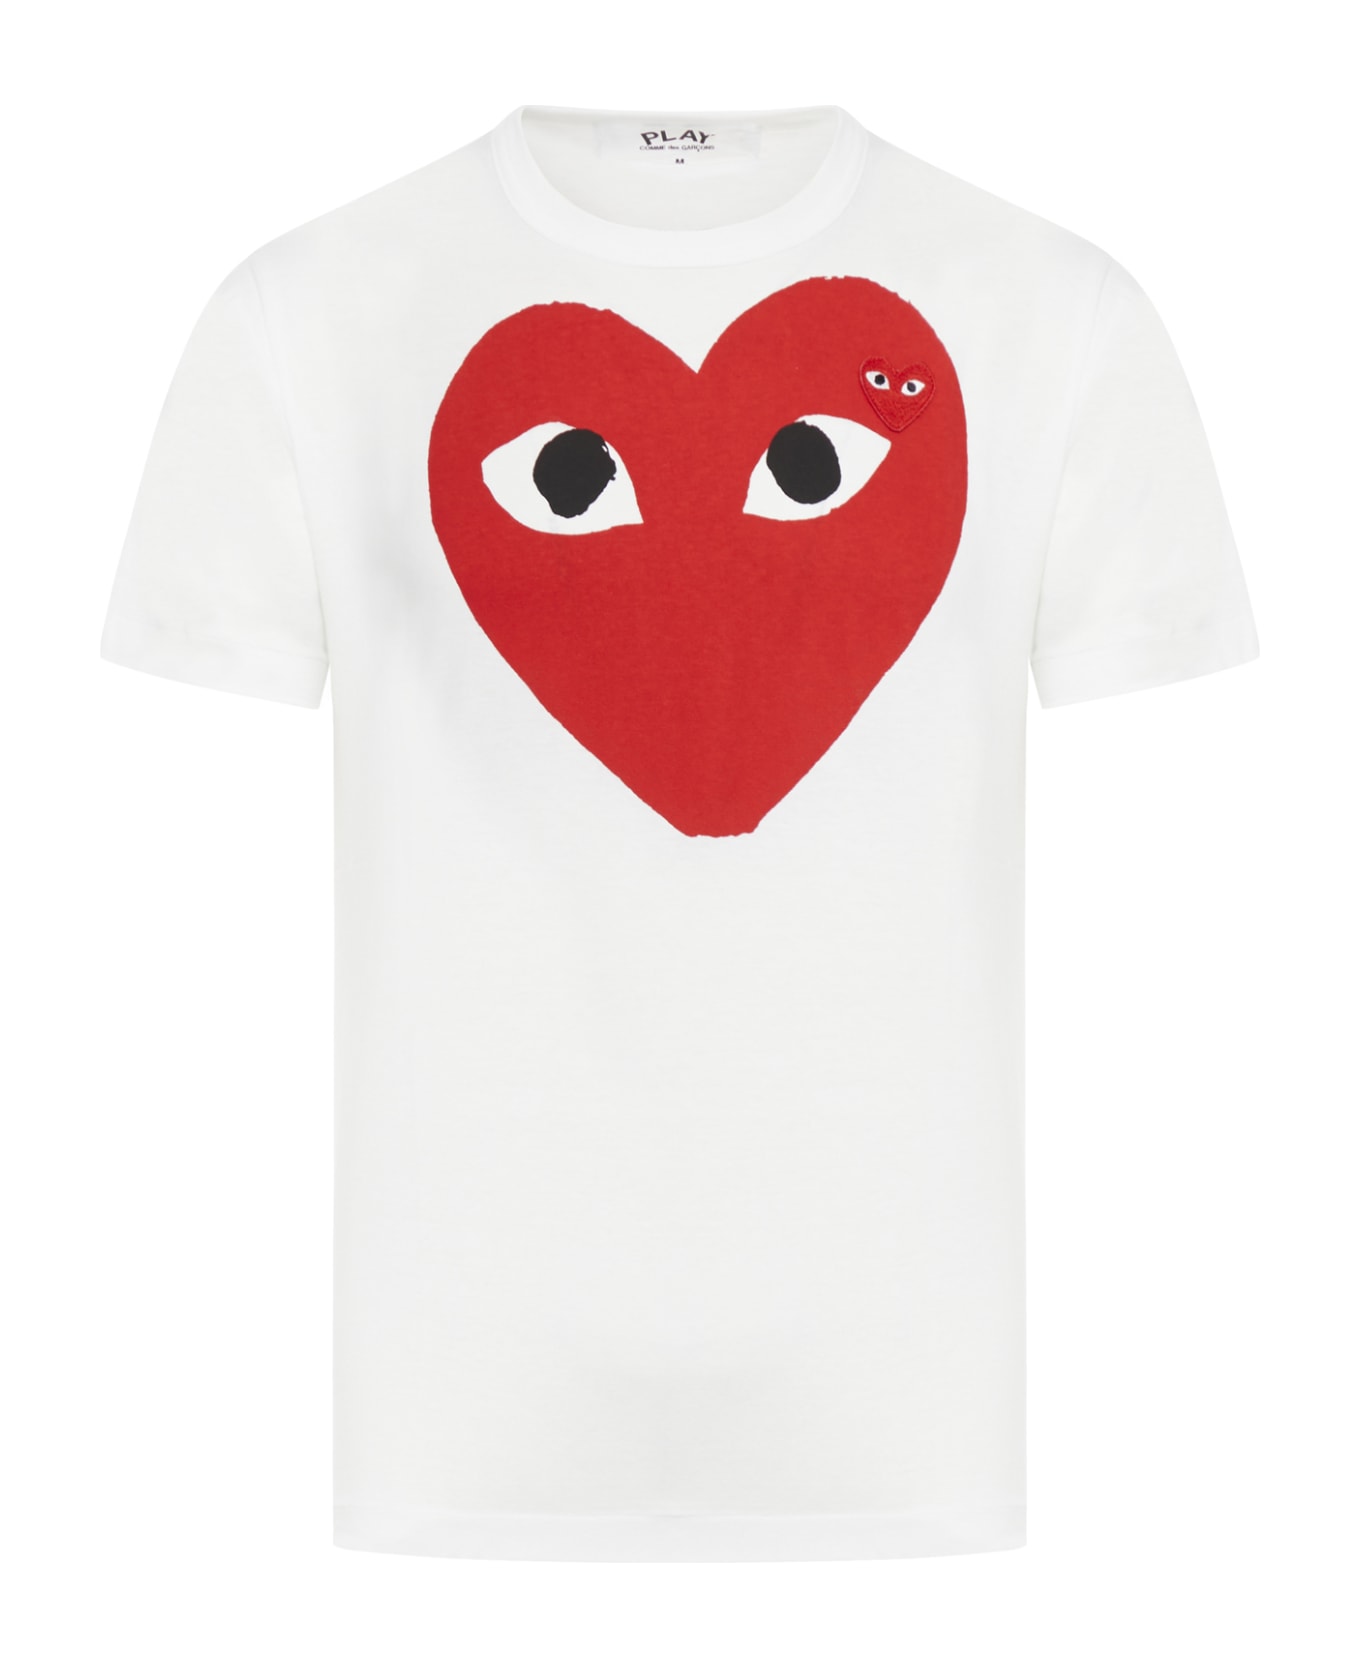 Comme des Garçons Play Play T-shirt Red Heart - White